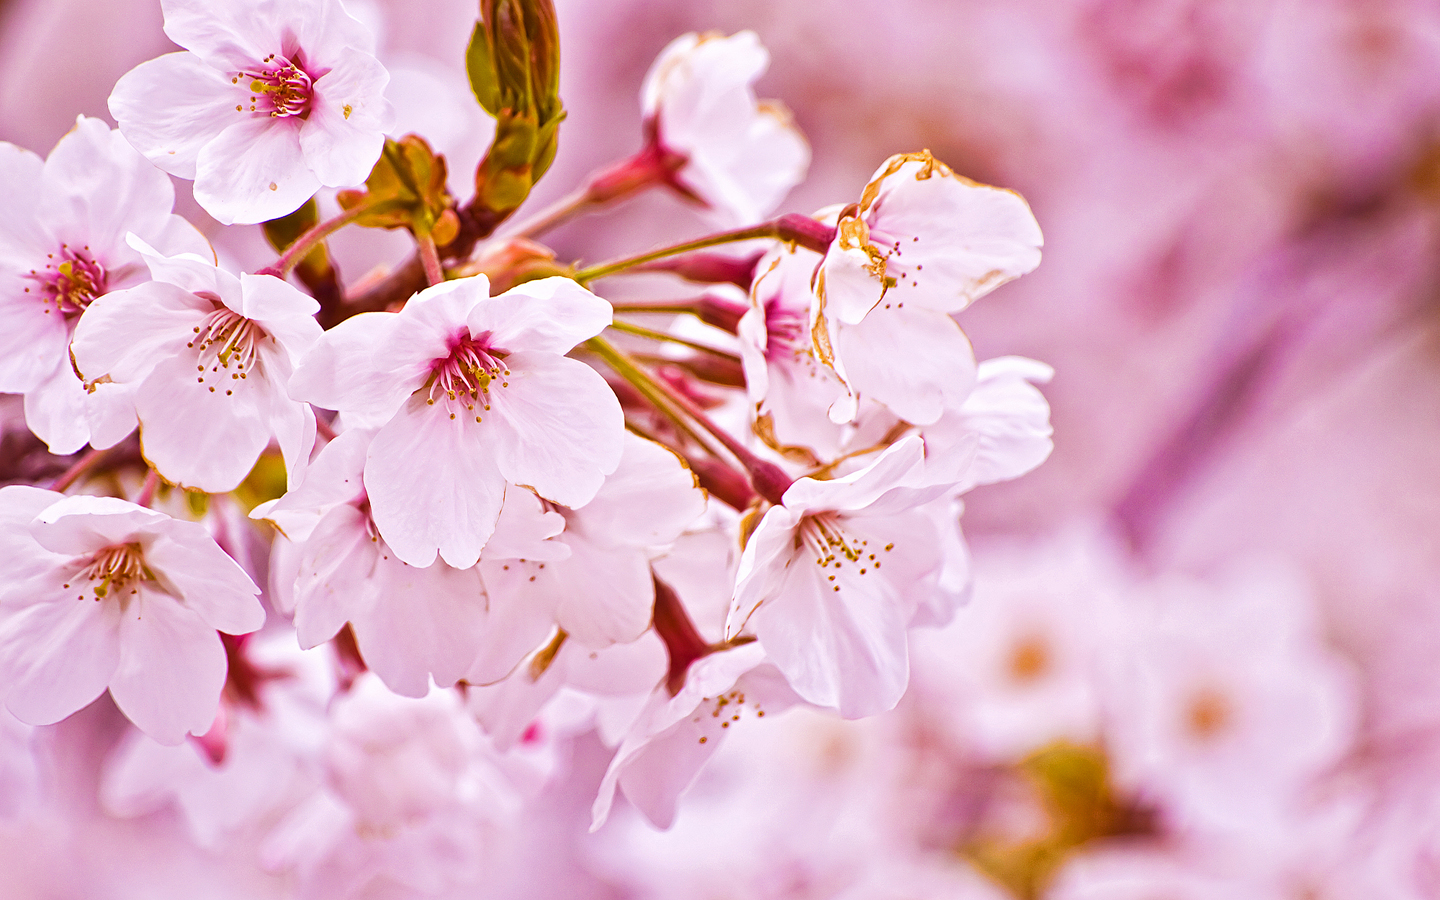 Sakura blossom. Черри блоссом. Вишня черри блоссом. Черри блоссом цветок. Сакура черри блоссом.